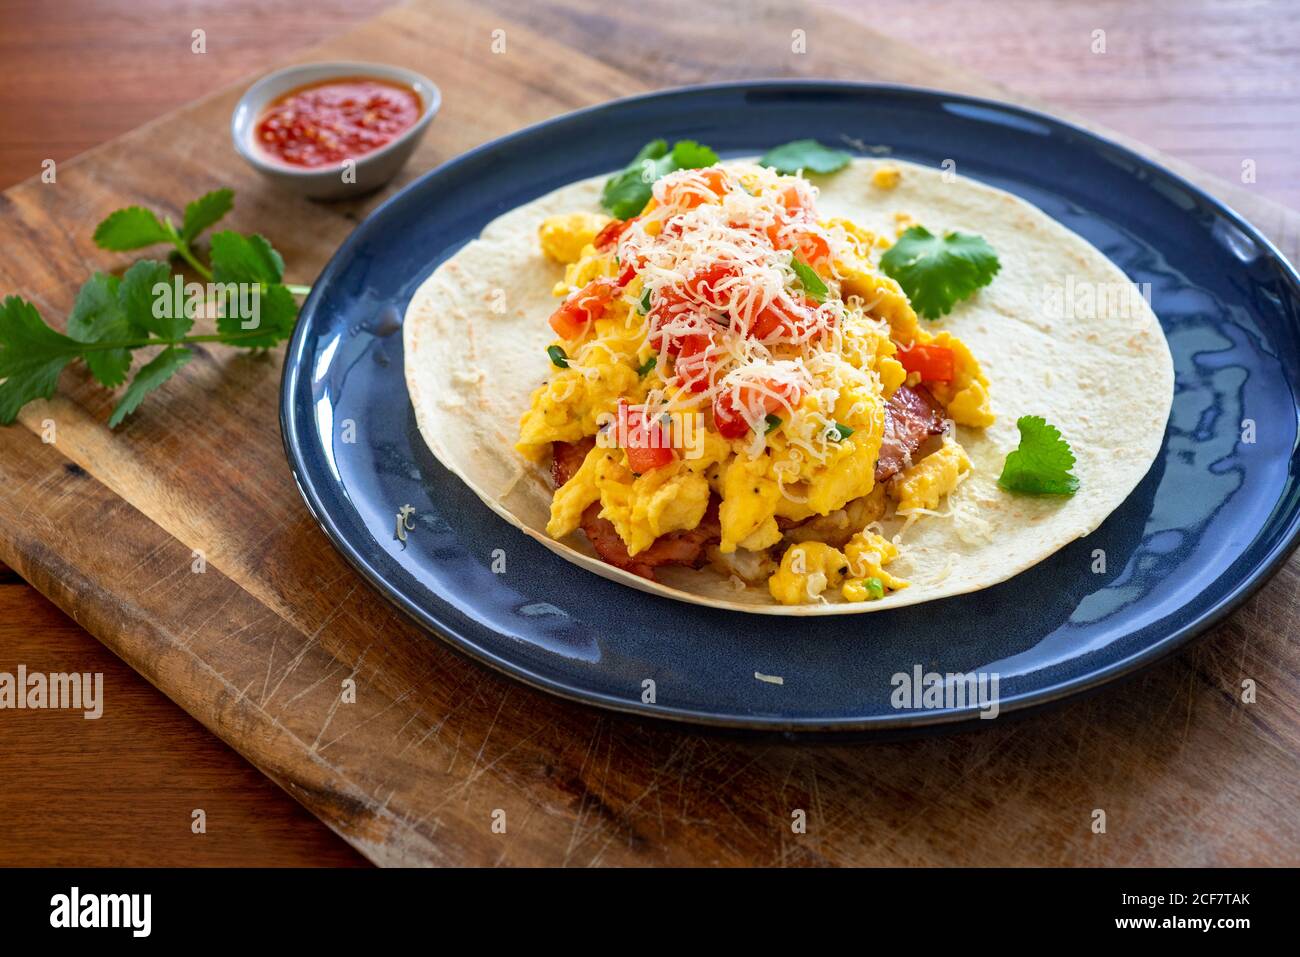 Breakfast burrito with scrambled eggs, tomato and cheese Stock Photo